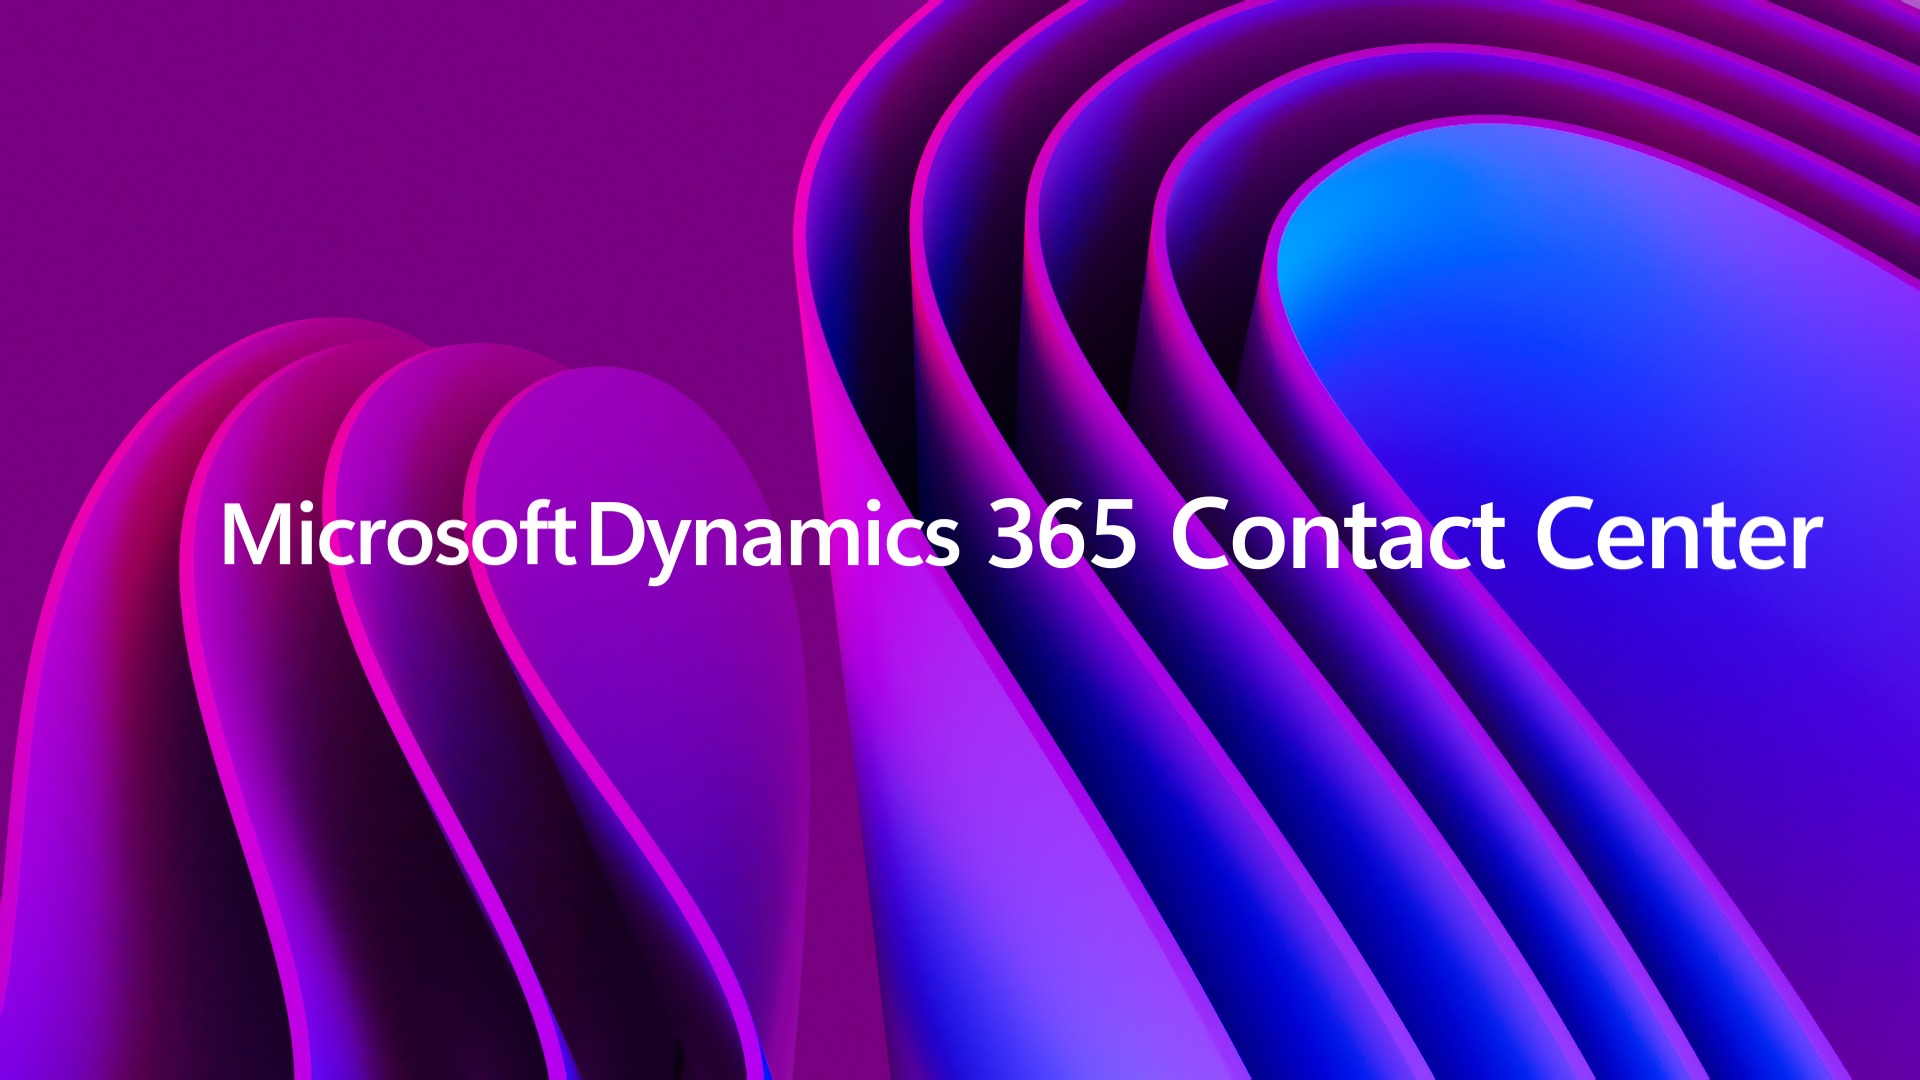 MicrosoftDynamics365联络中心现已正式发布